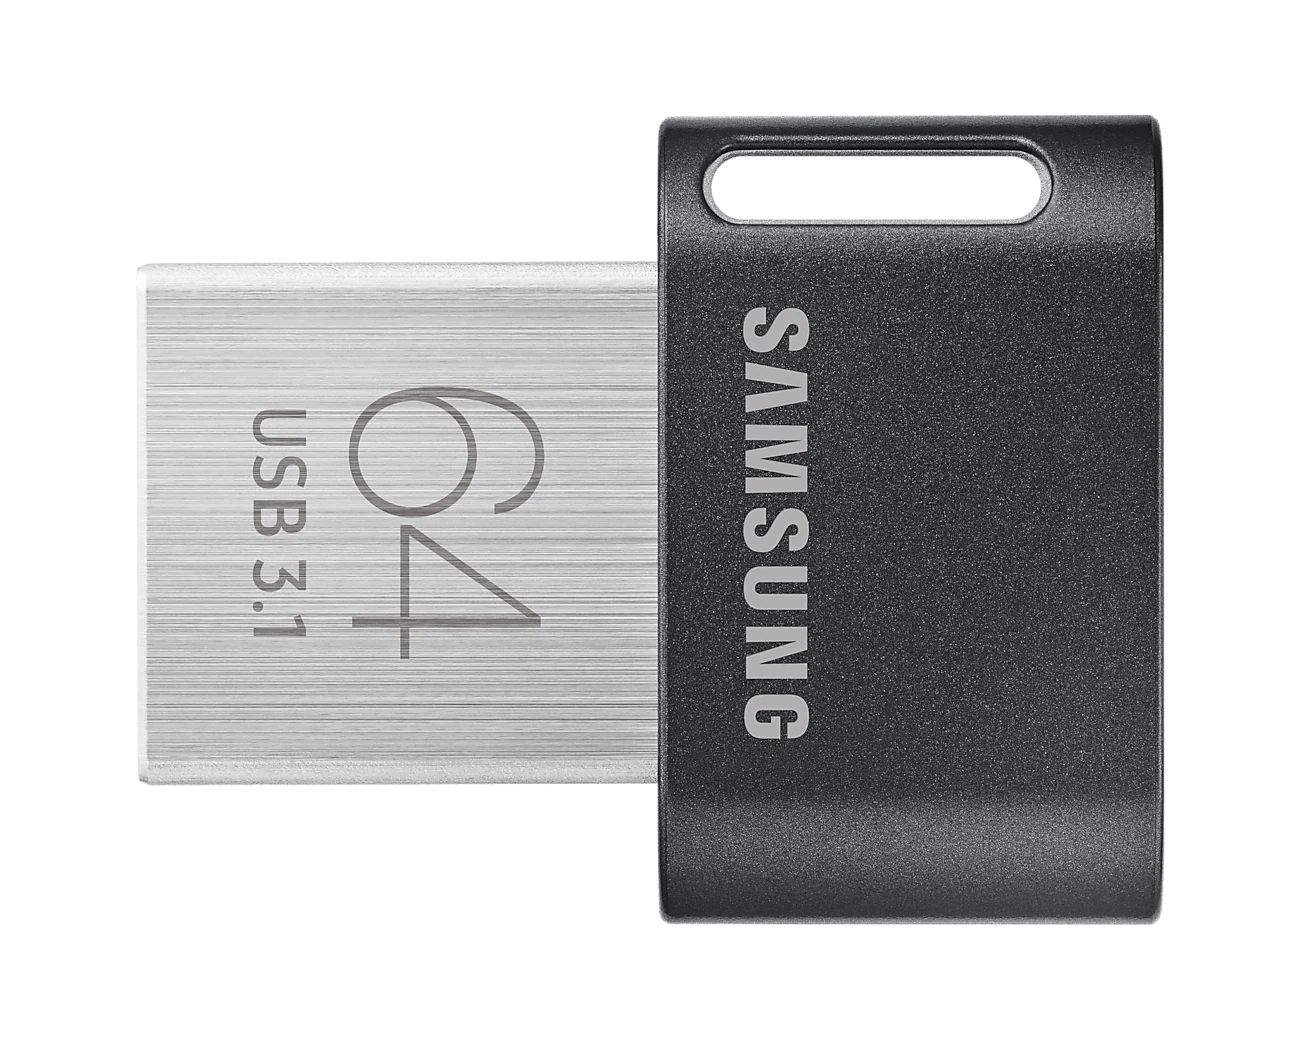 Флеш накопитель 64GB SAMSUNG FIT Plus, USB 3.1, 300 MB/s